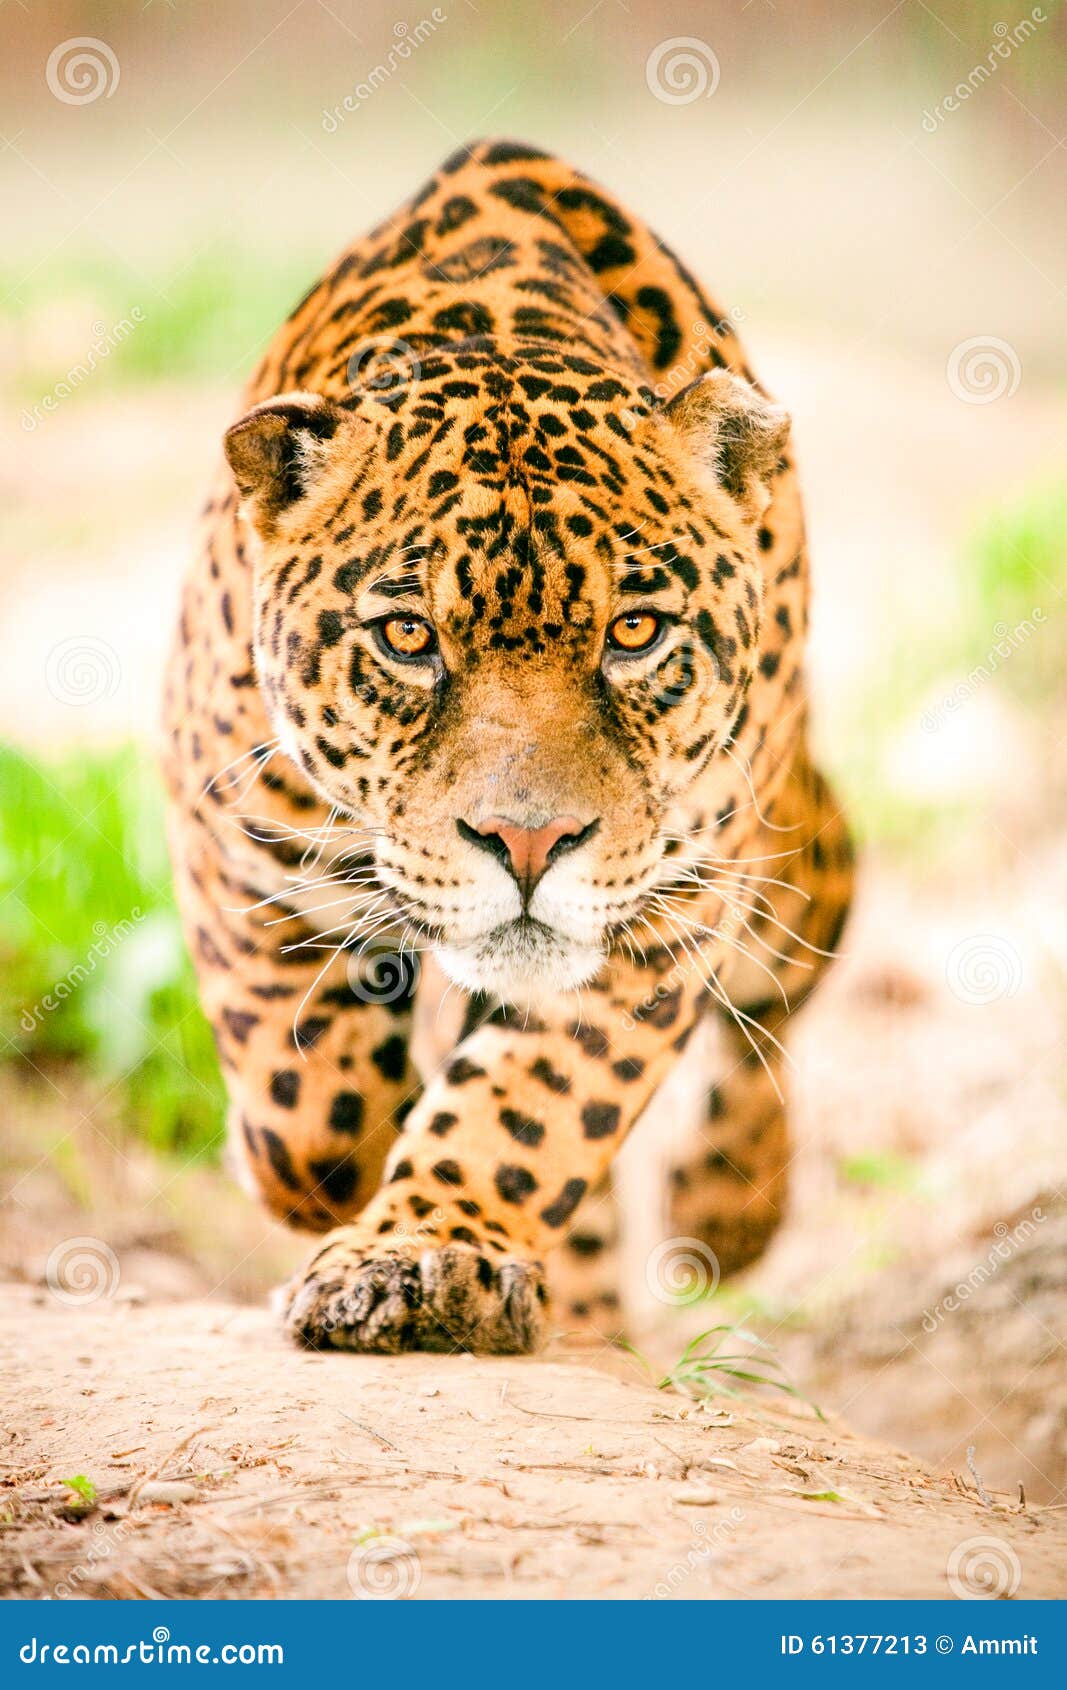 jaguar in motion